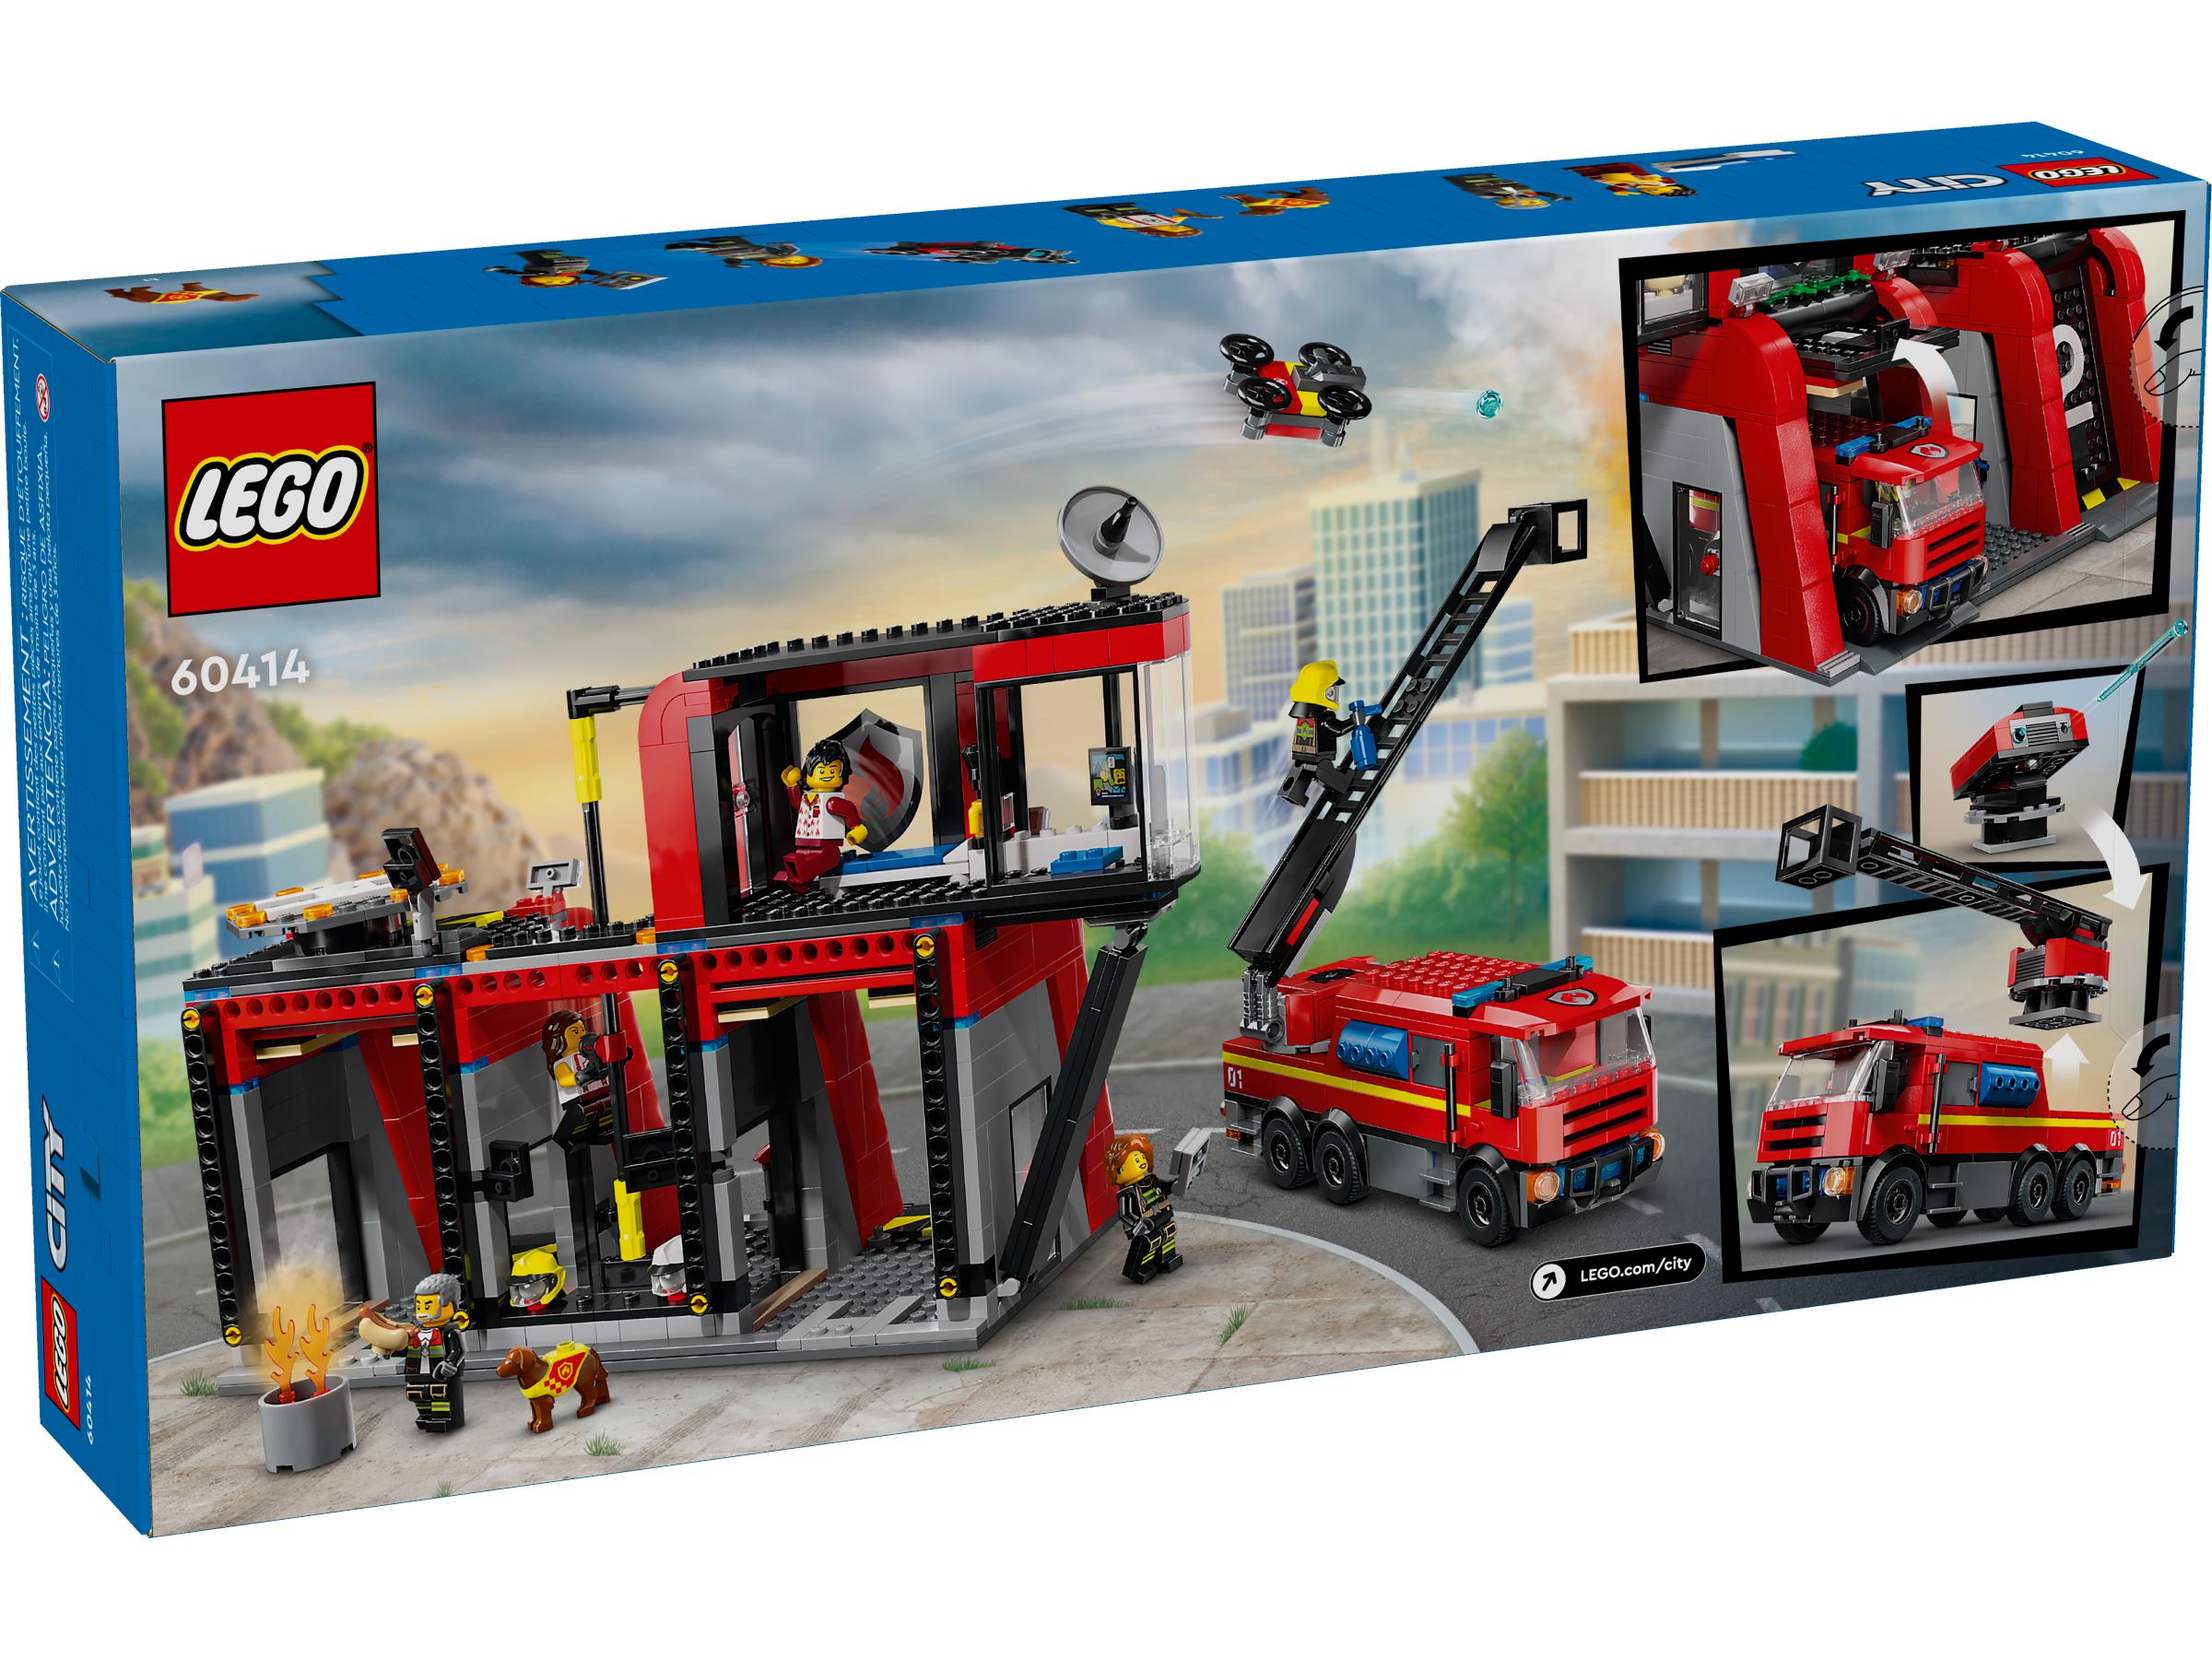 LEGO City 60414 Feuerwehrstation mit Drehleiterfahrzeug LEGO_60414_alt7.jpg